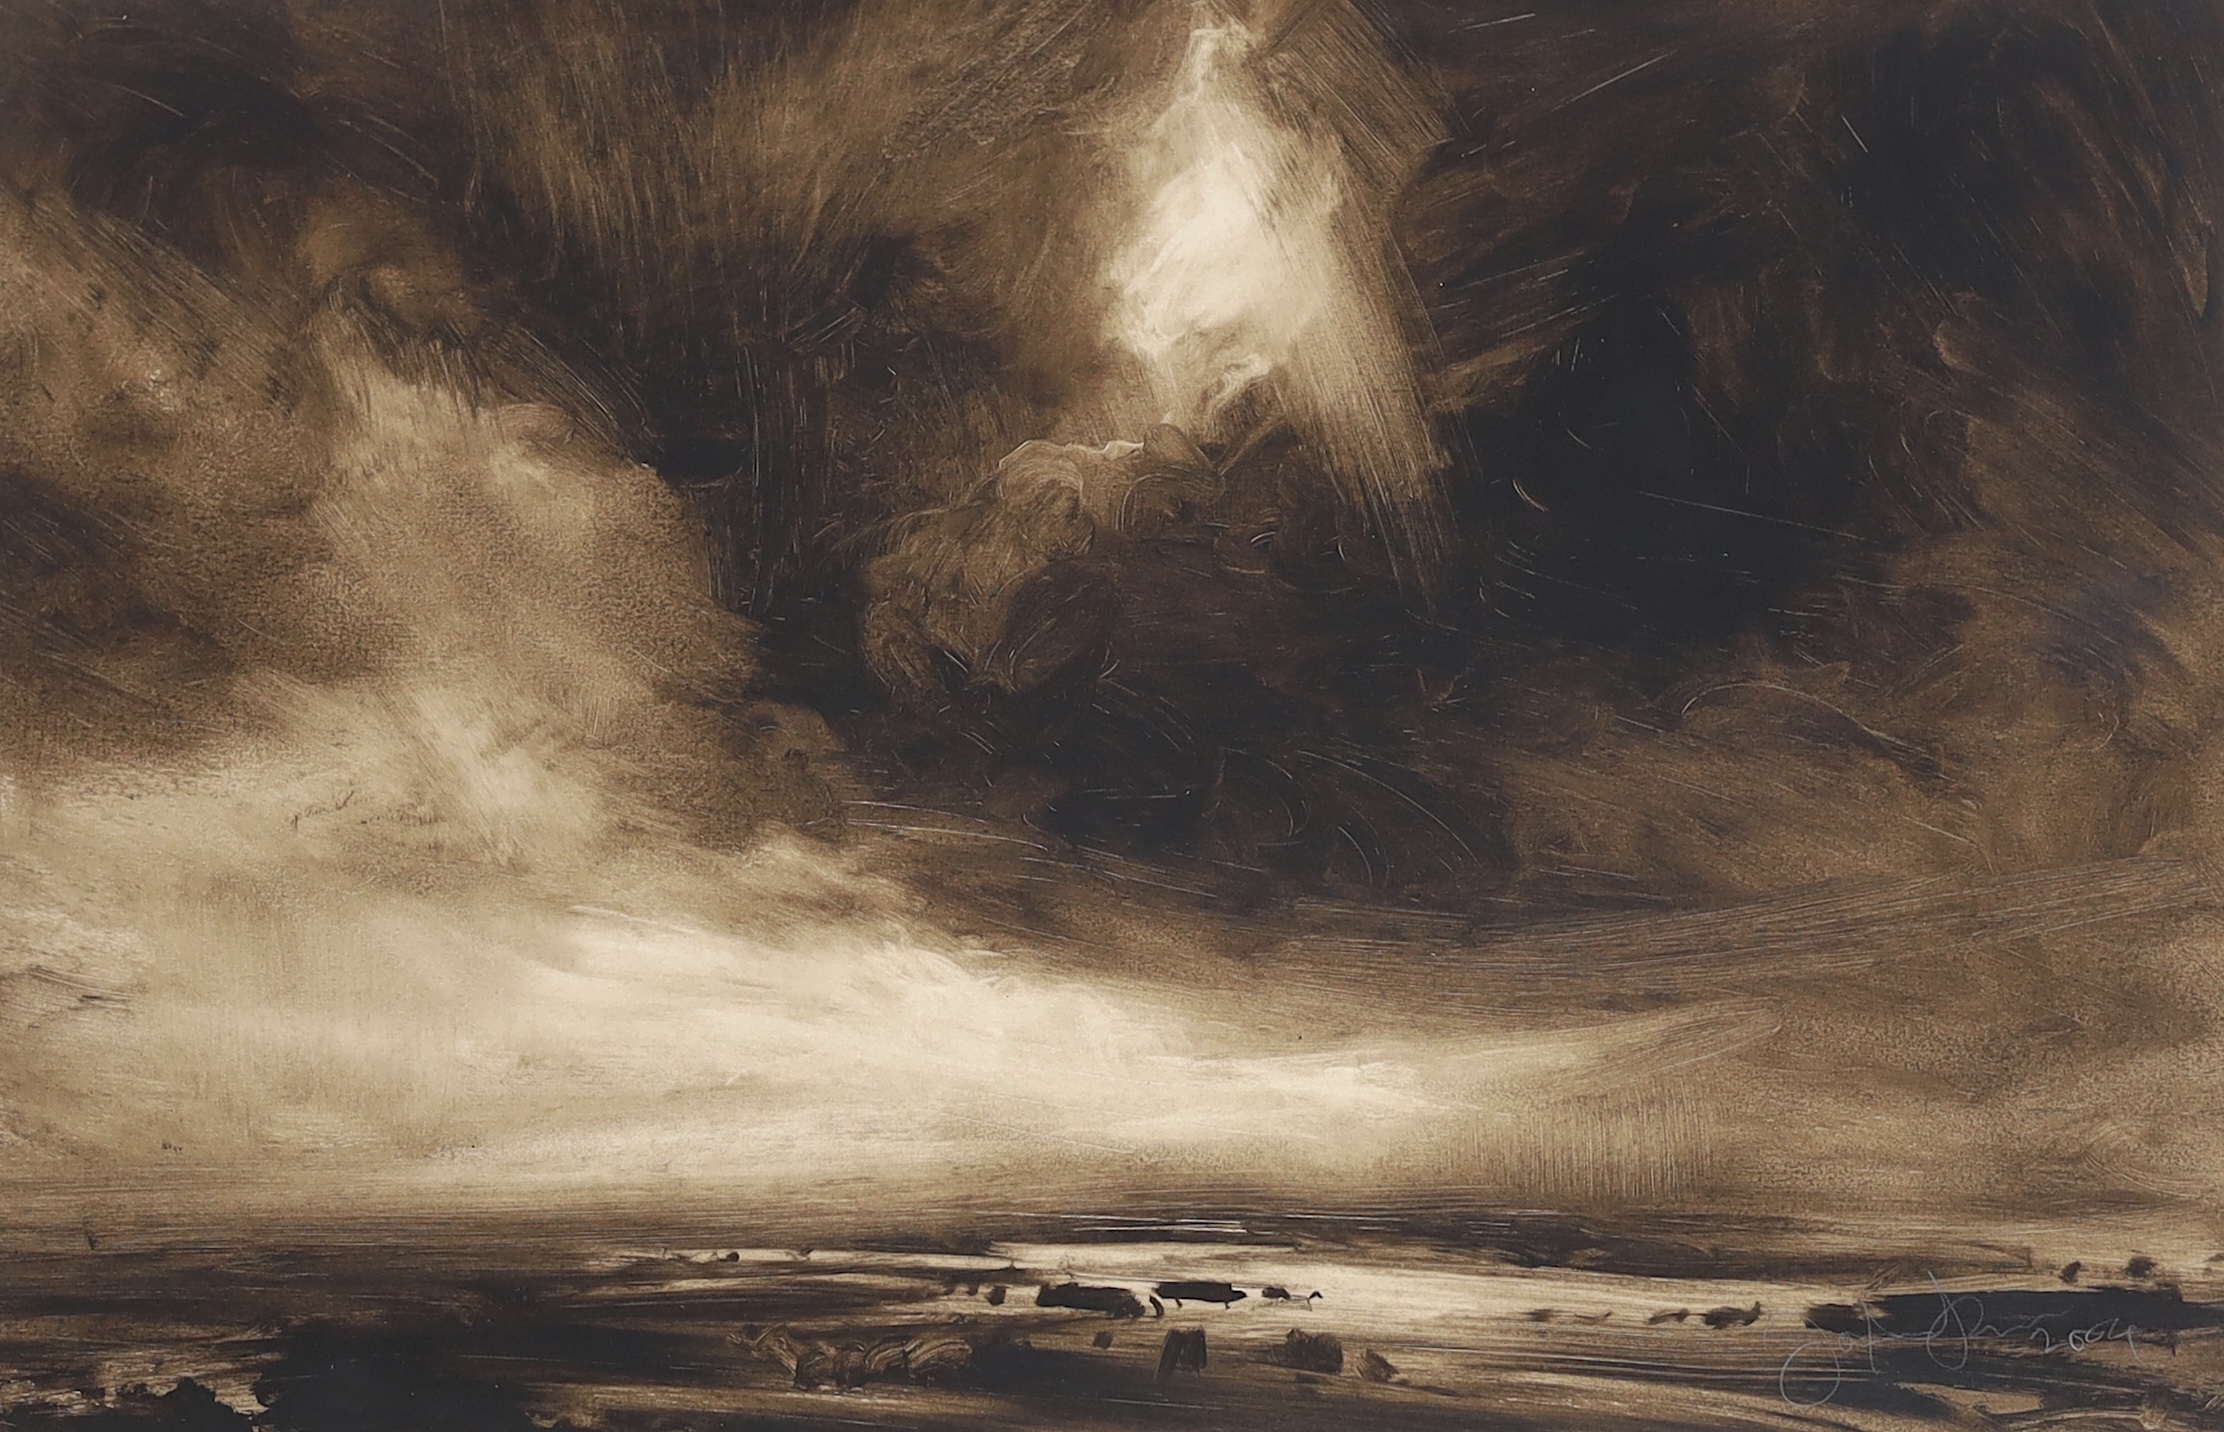 James Naughton (b 1971), 'Light through clouds', watercolour, 28.5 x 44cm